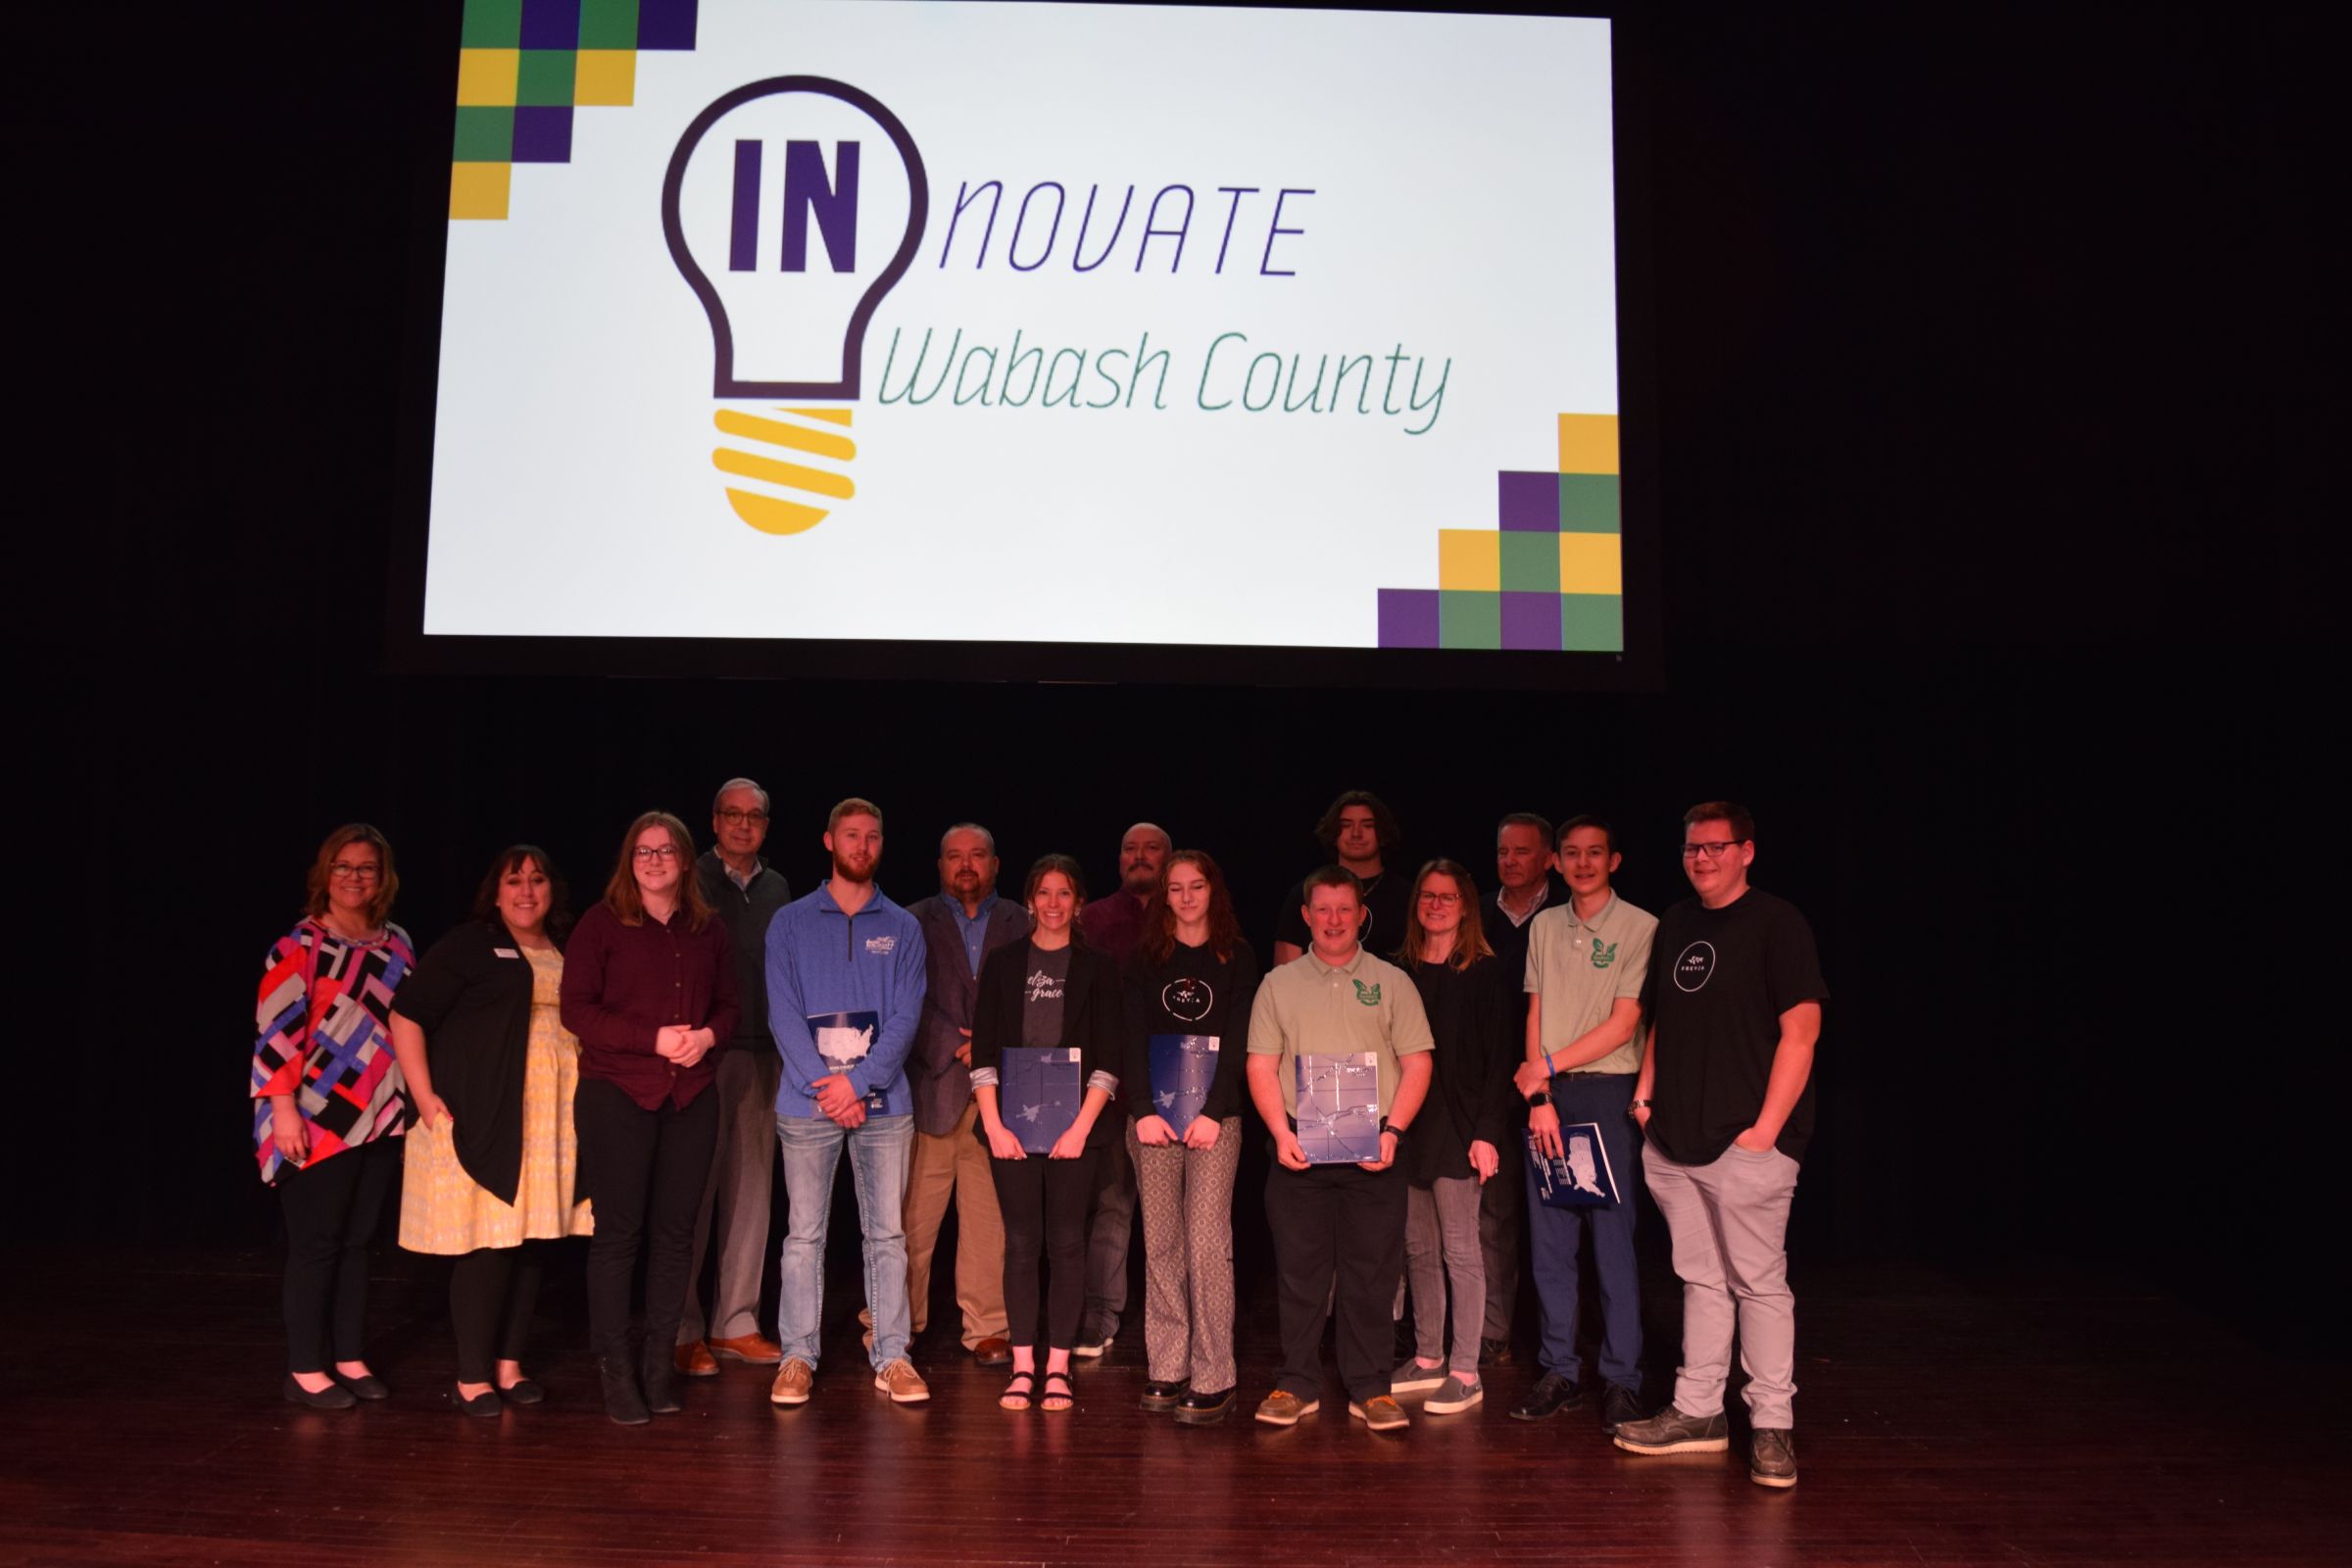 Click the INnovate Wabash County celebrates student entrepreneurship Slide Photo to Open